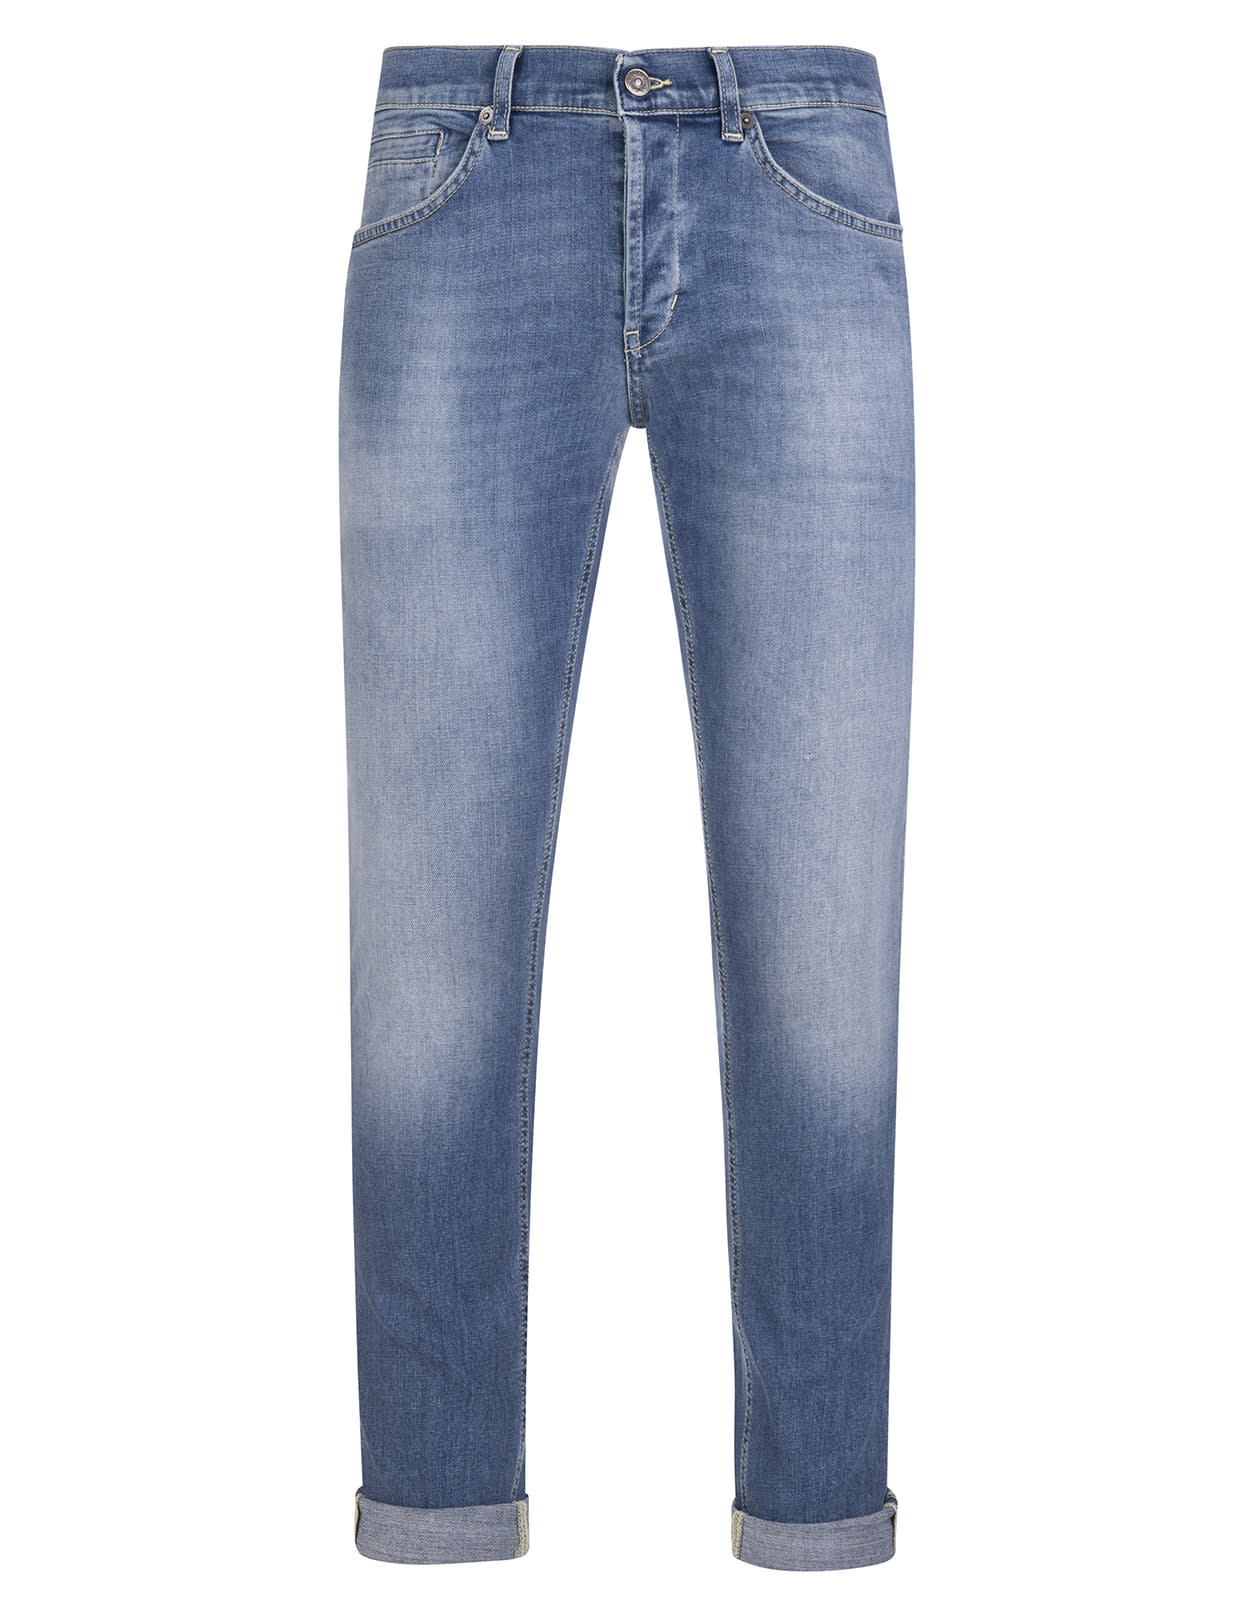 Dondup Man George Skinny Jeans In Medium-light Blue Stretch Eco Denim